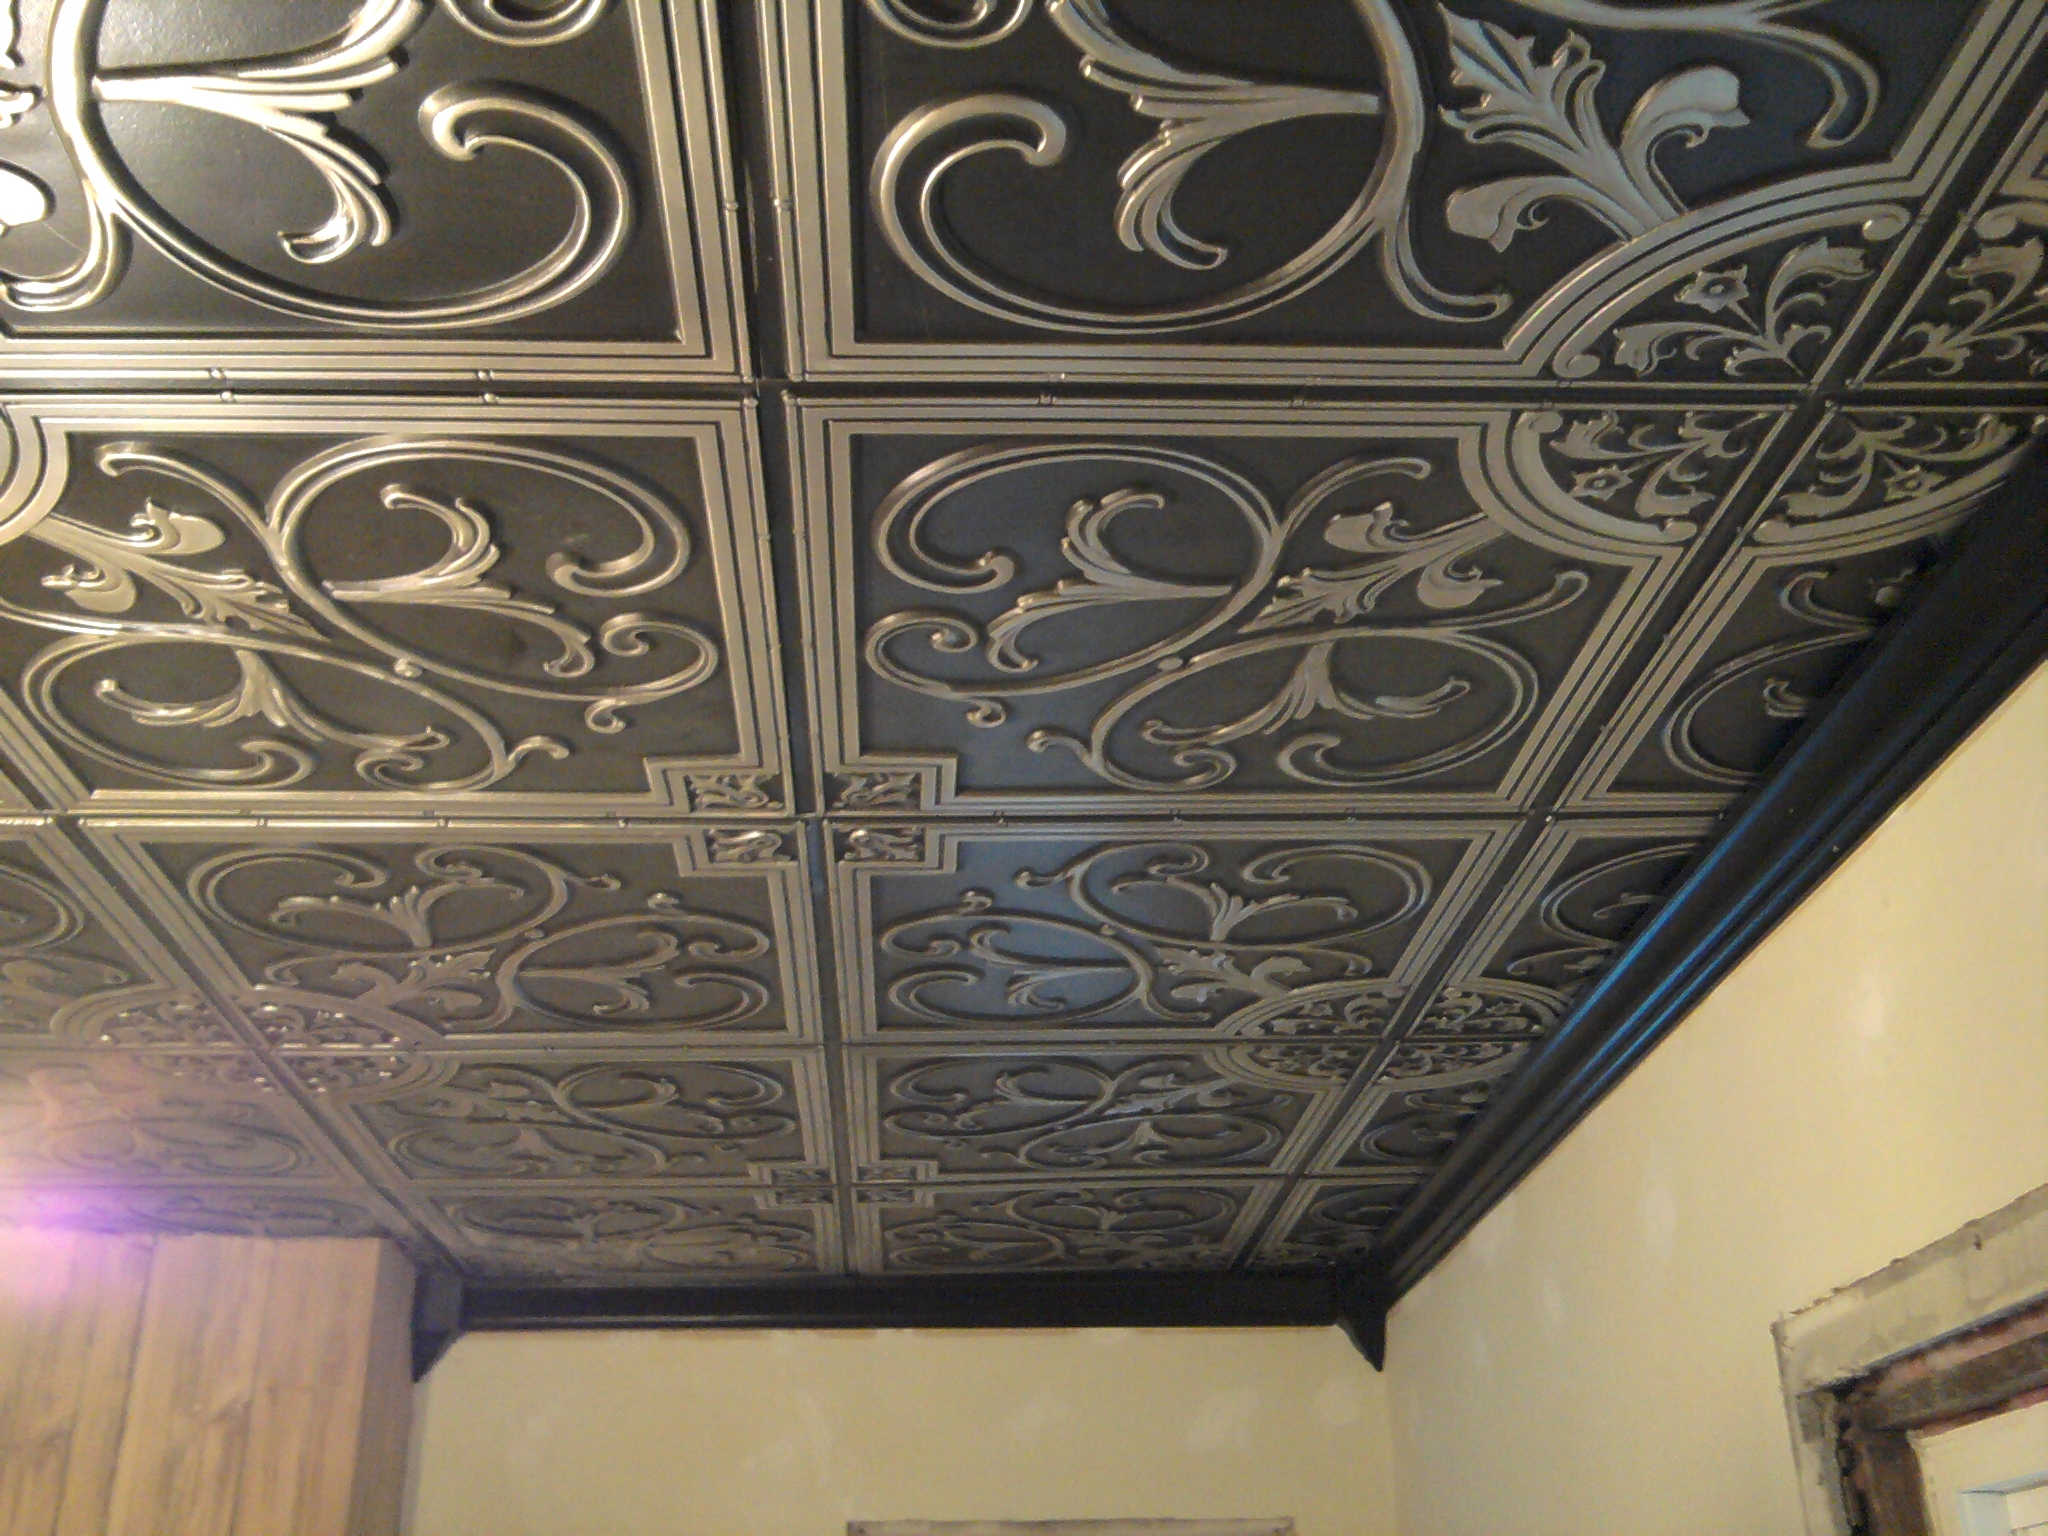 Antique Ceiling Tile Wallpaperfaux tin ceiling tiles wallpaper ifrastudio